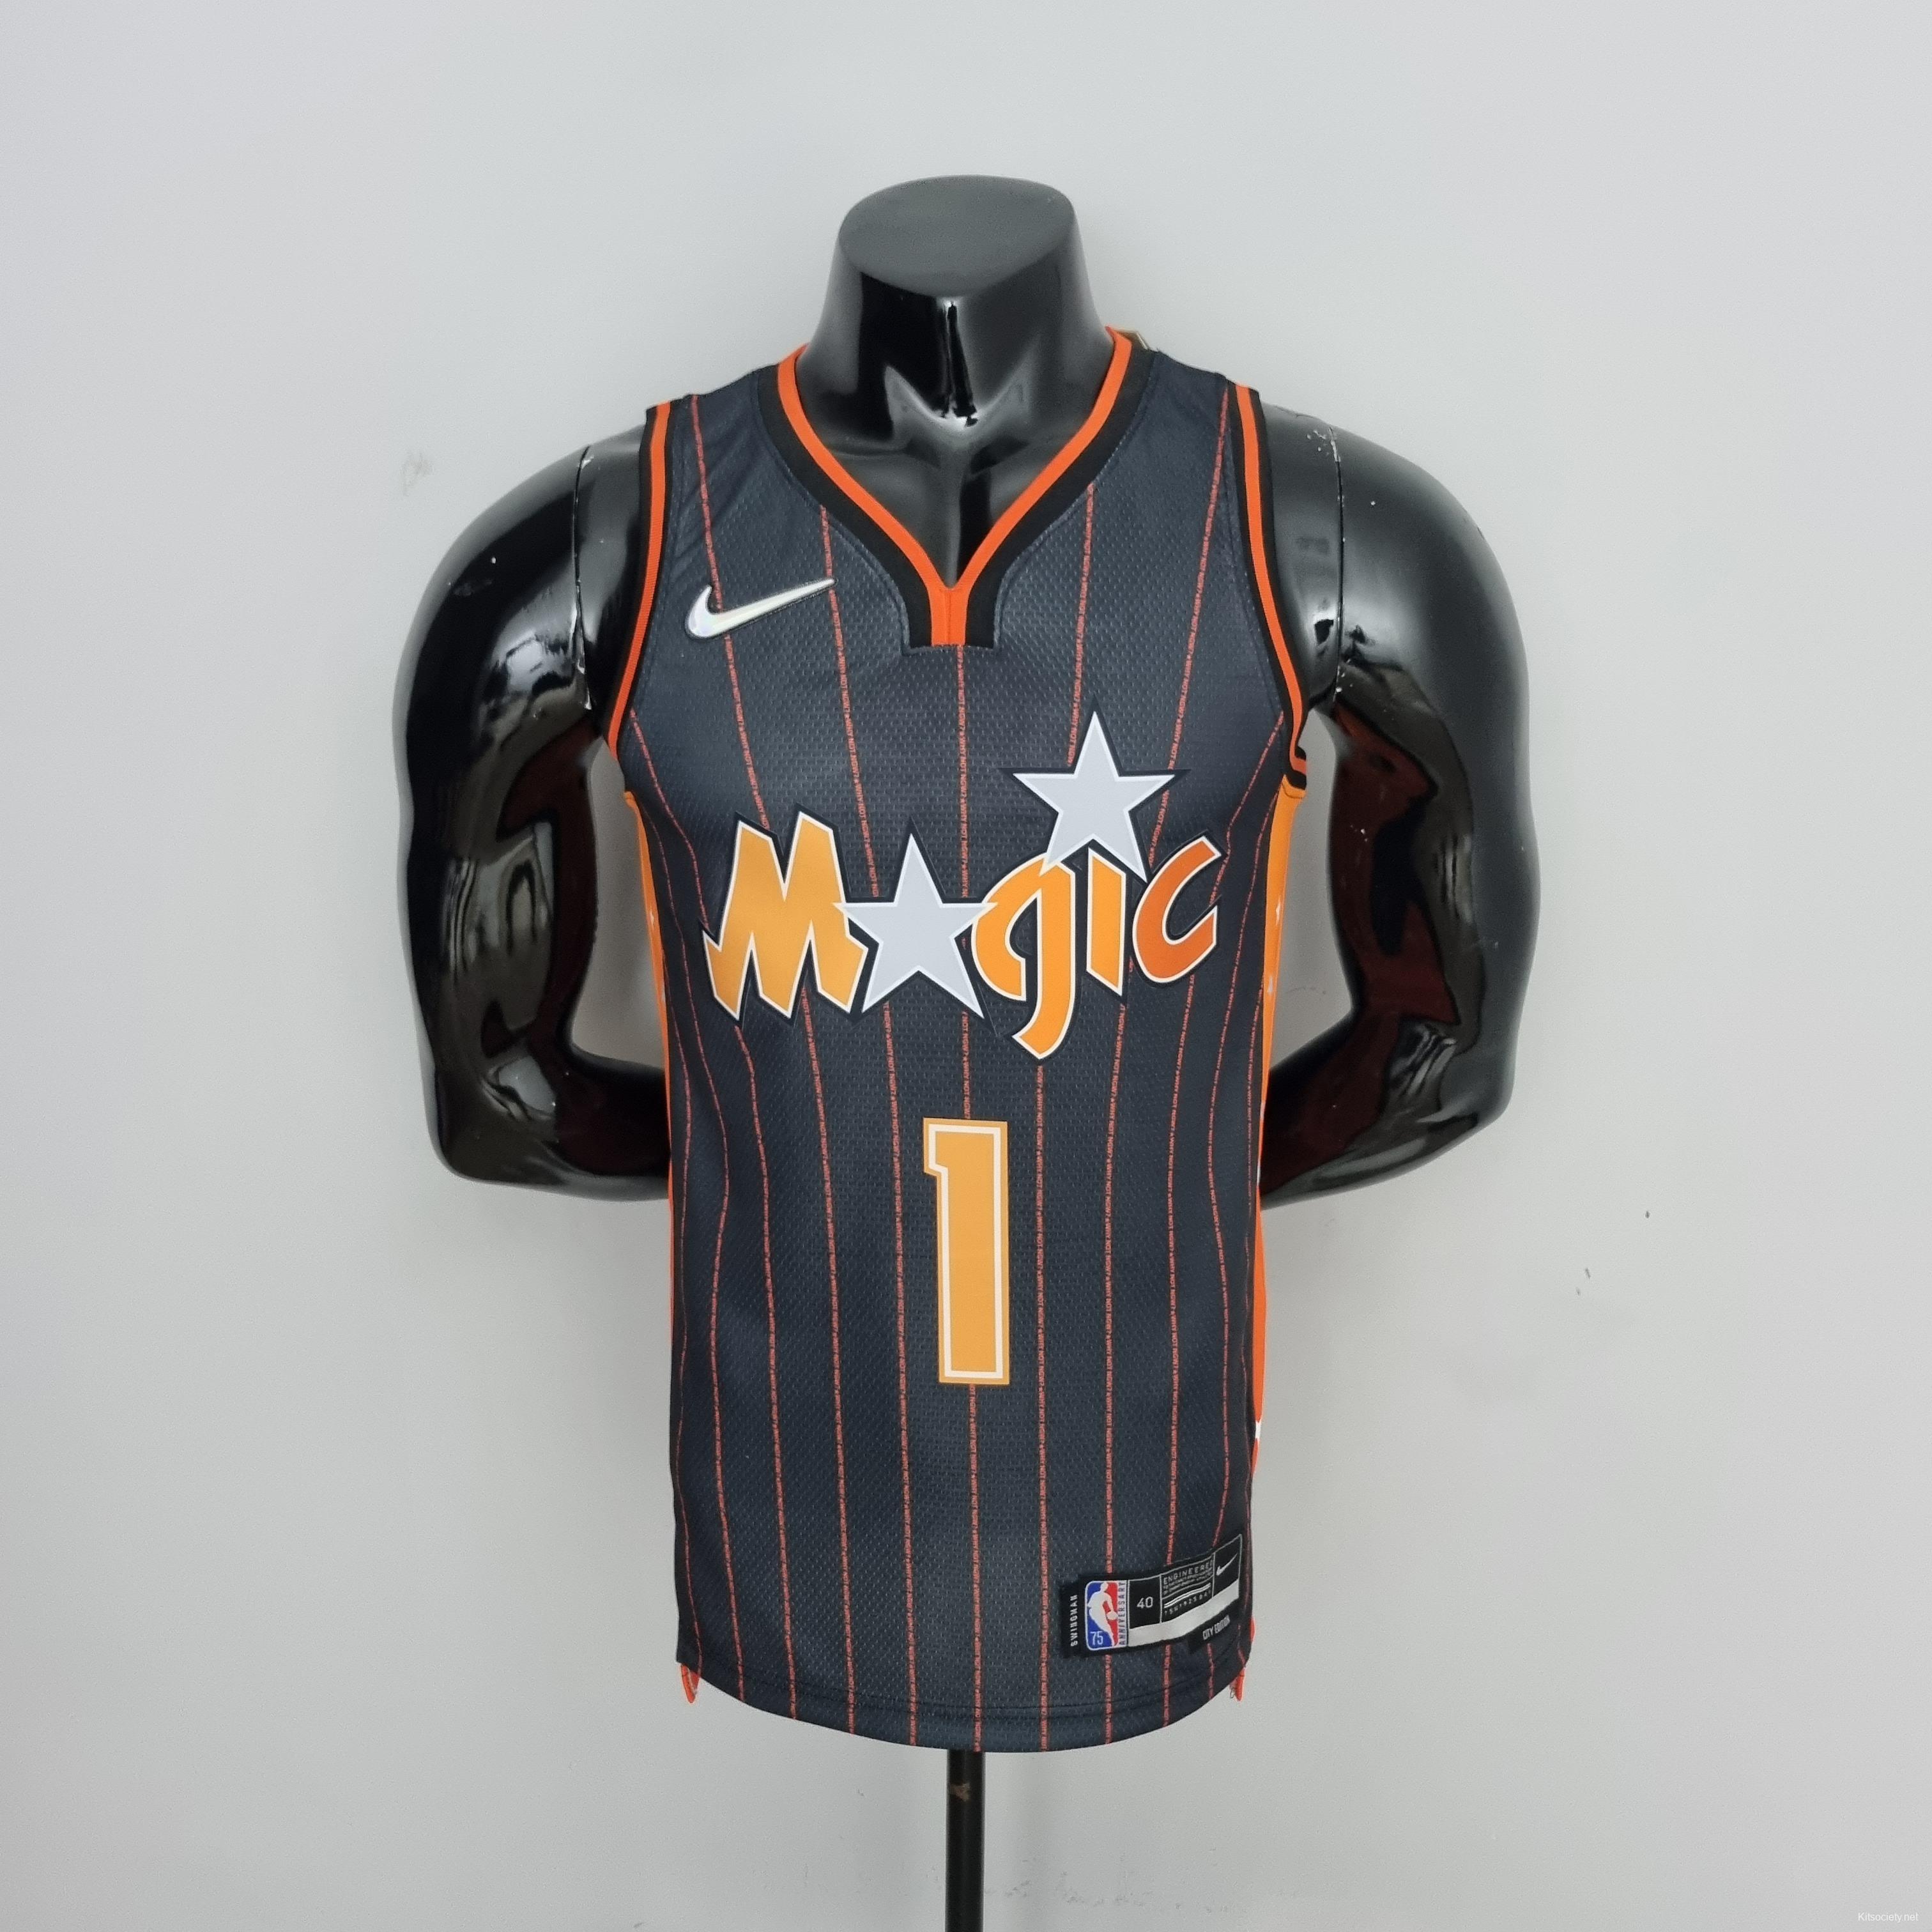 Orlando Magic City Edition Uniform: chasing higher heights